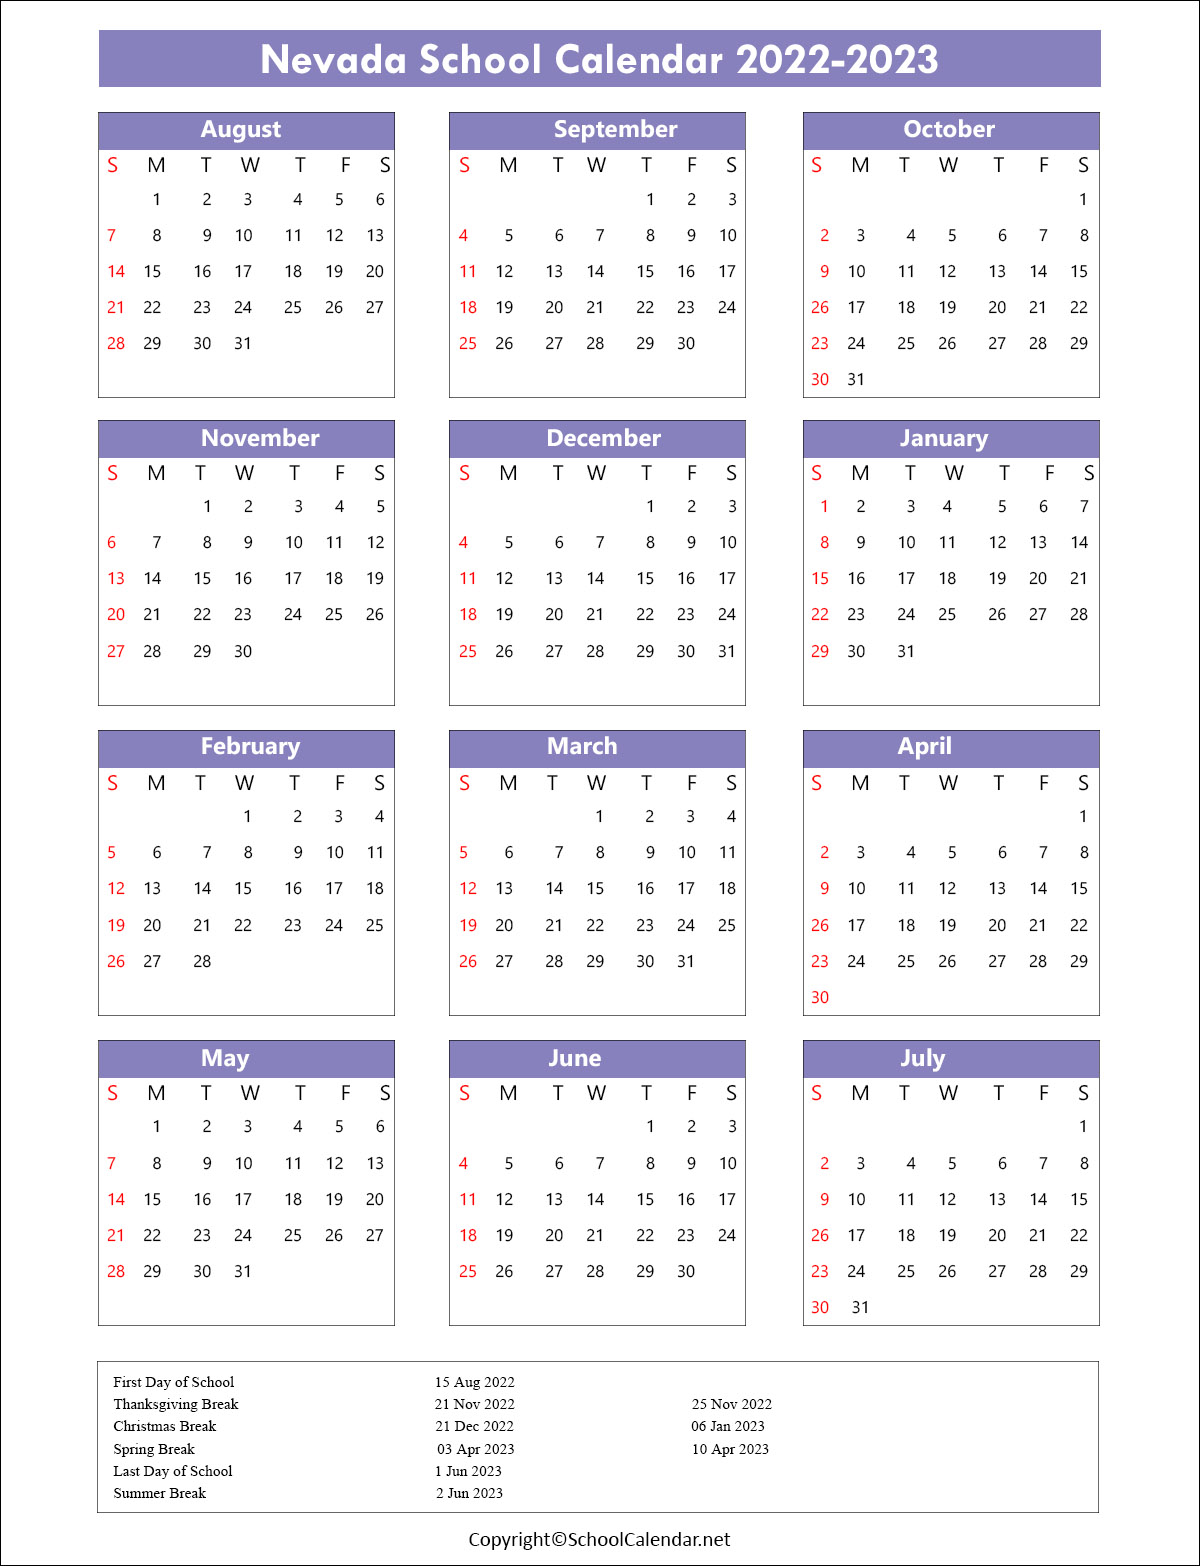 Nevada School Calendar 2022